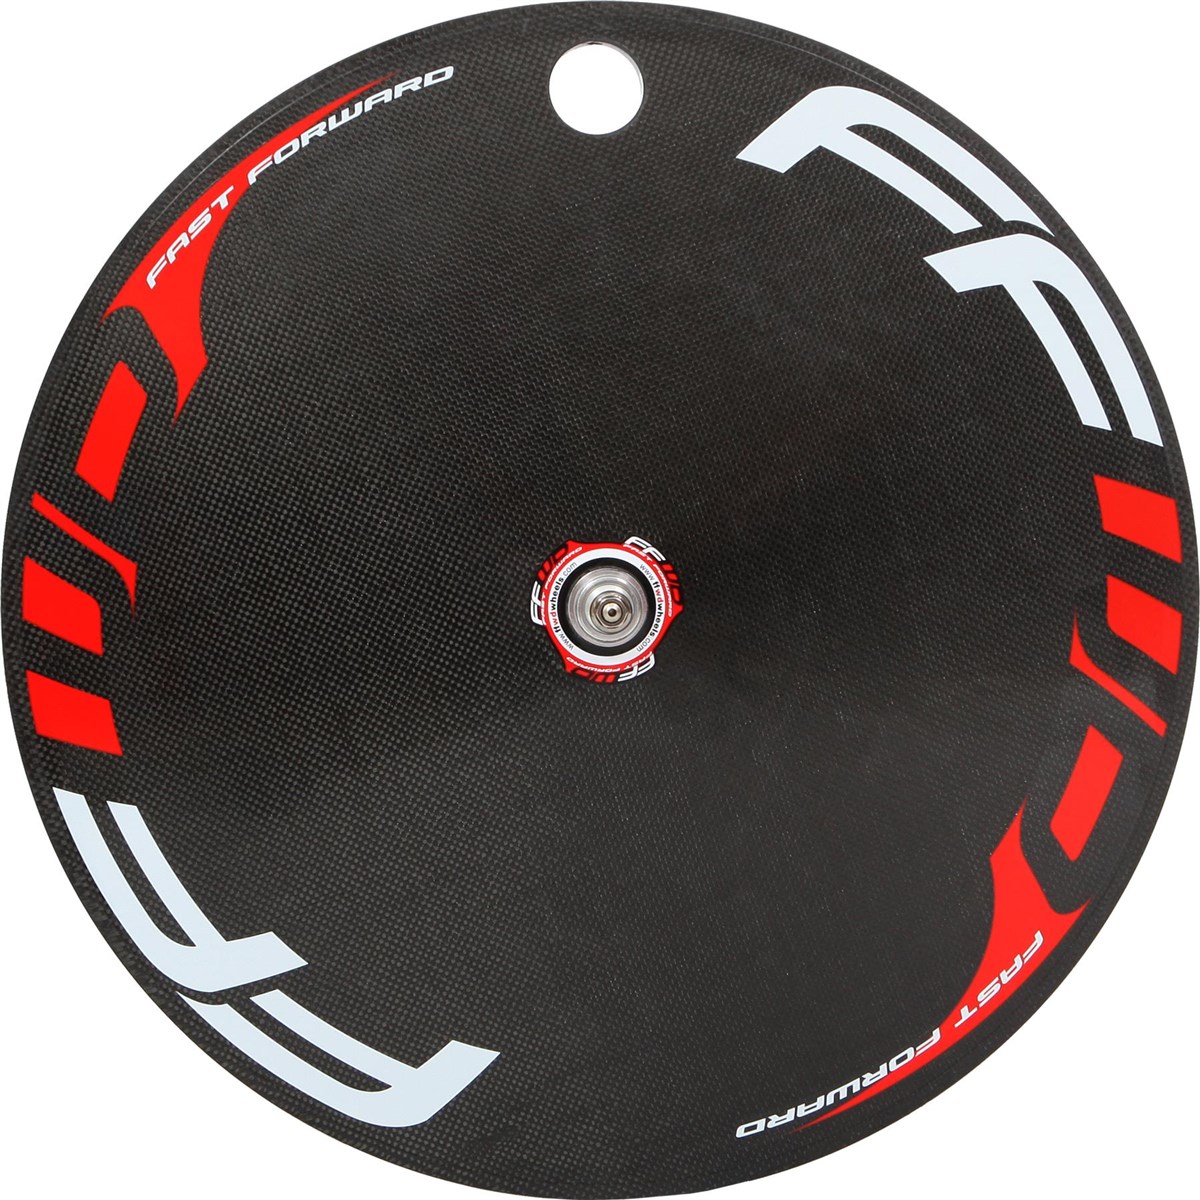 Fast Forward Disc-T Tubular Wheels product image